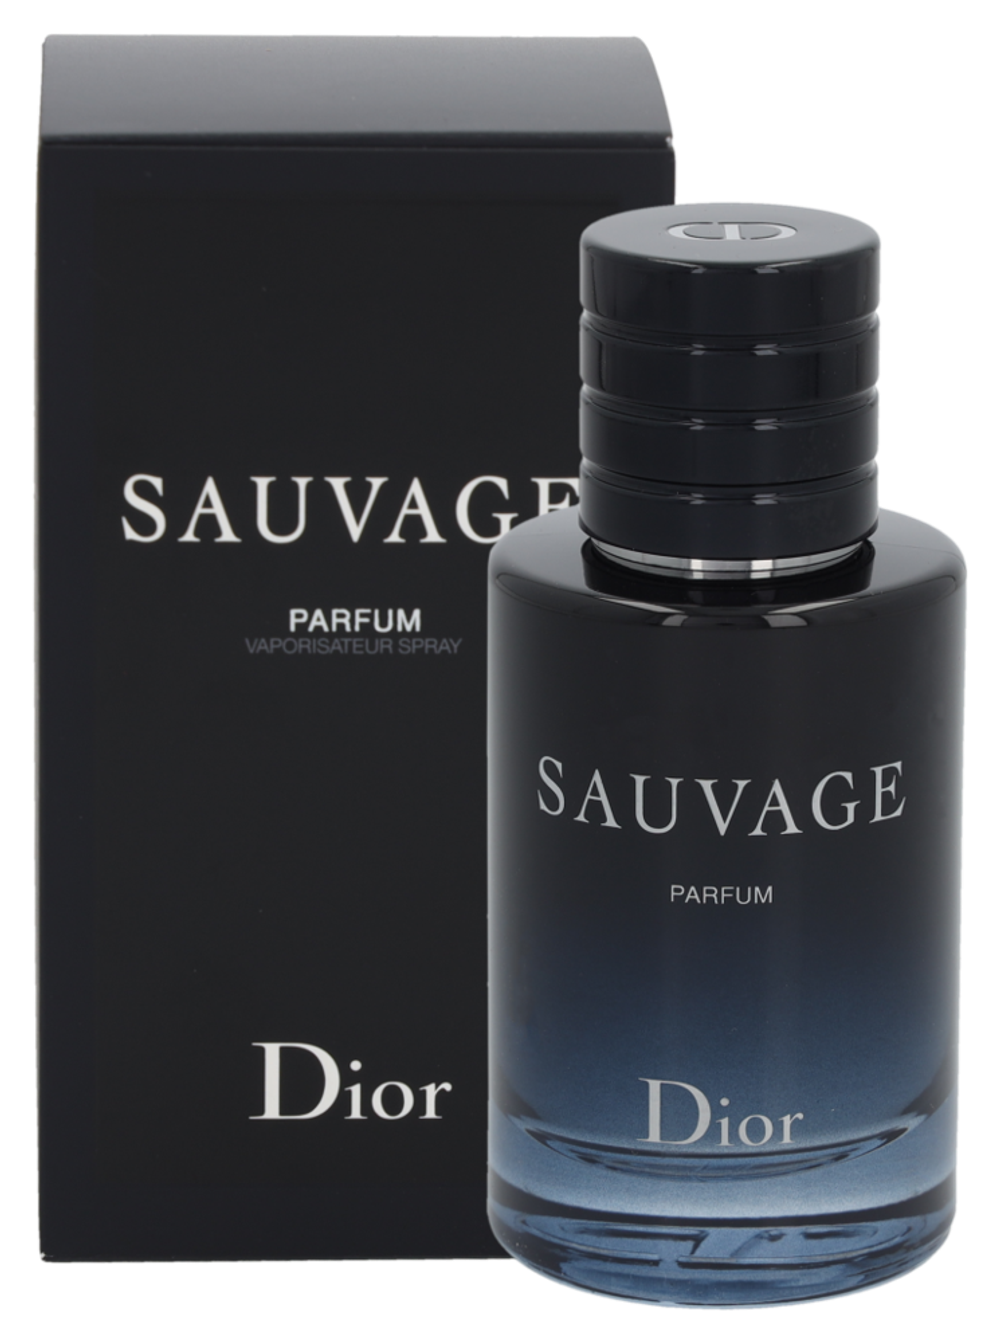 Tilbud på Dior Sauvage Parfum Spray fra Fleggaard til 699 kr.